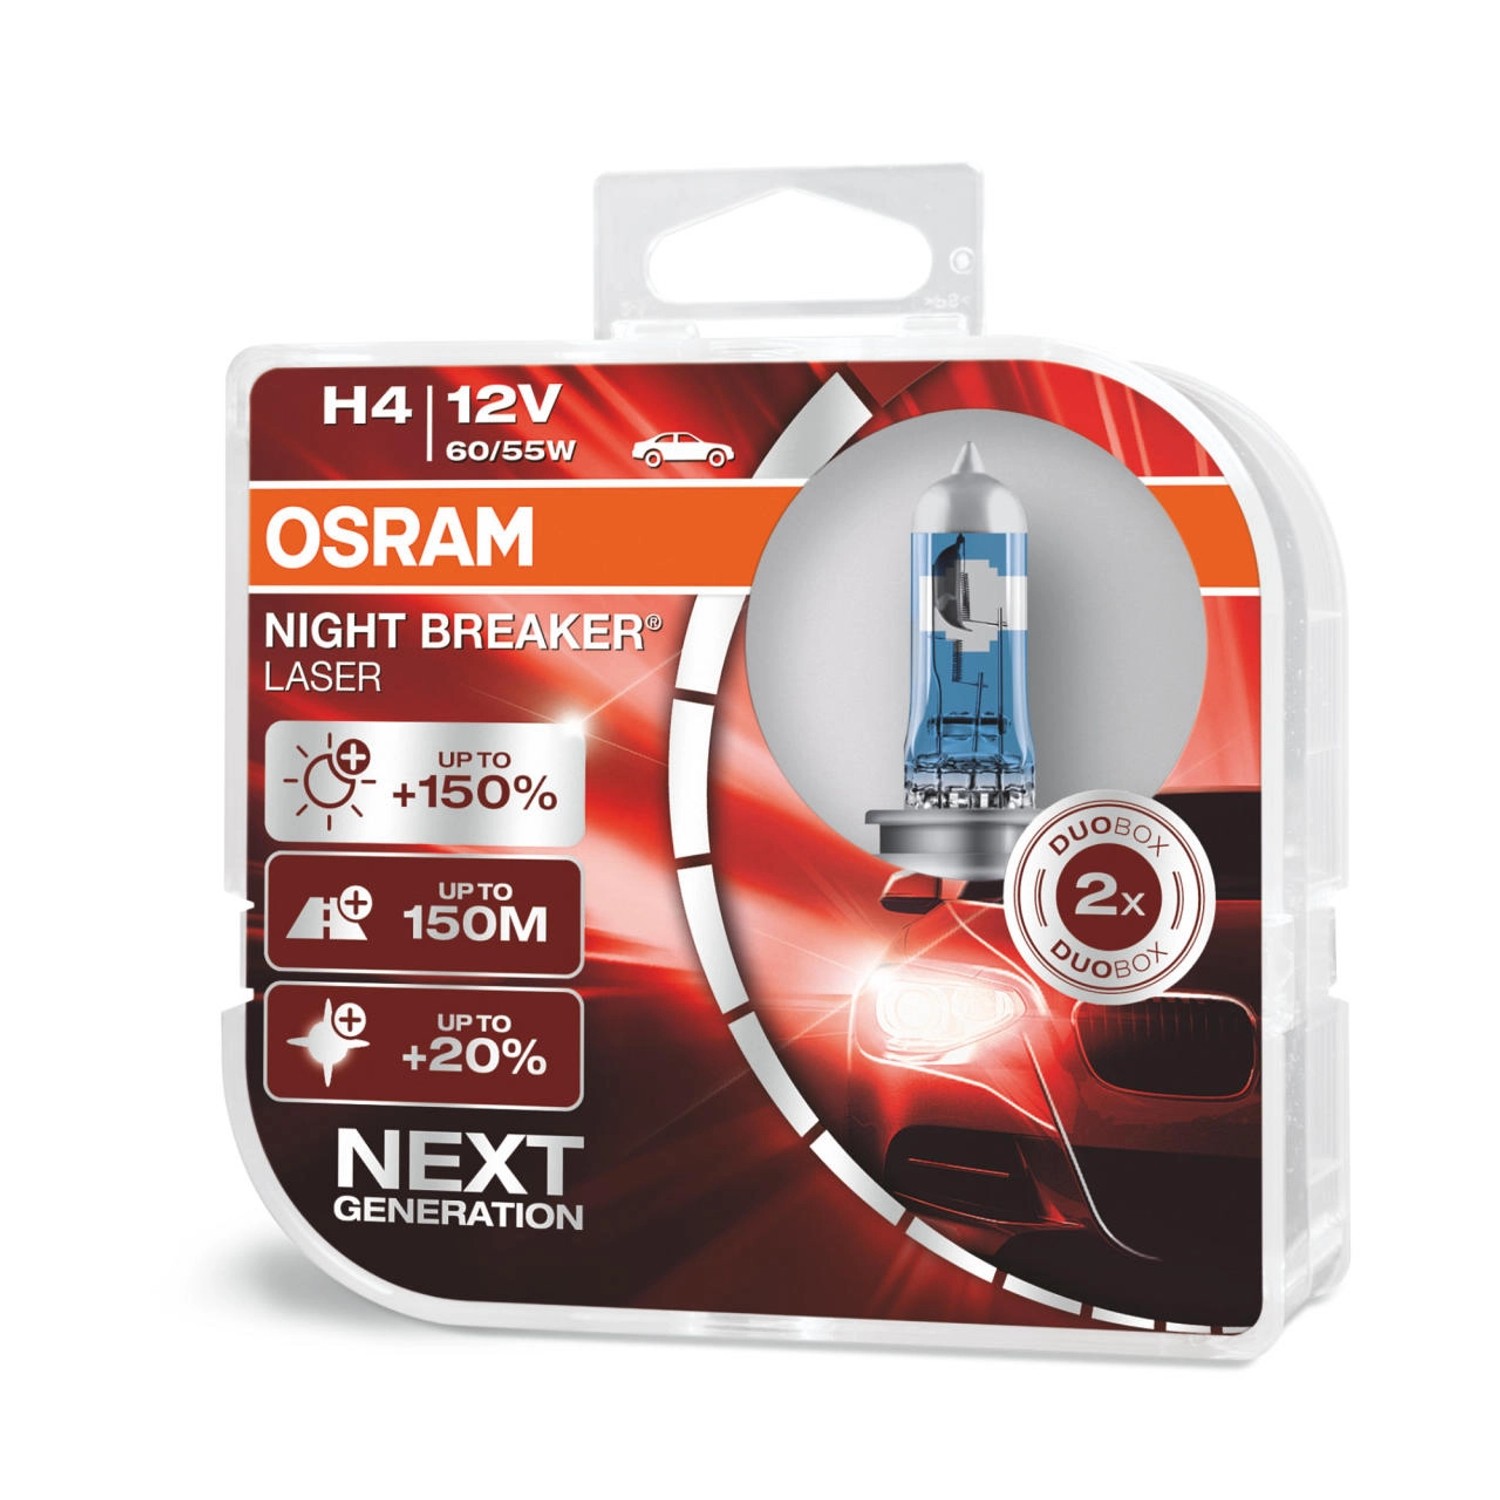 Osram Night Breaker Laser H4 Duobox